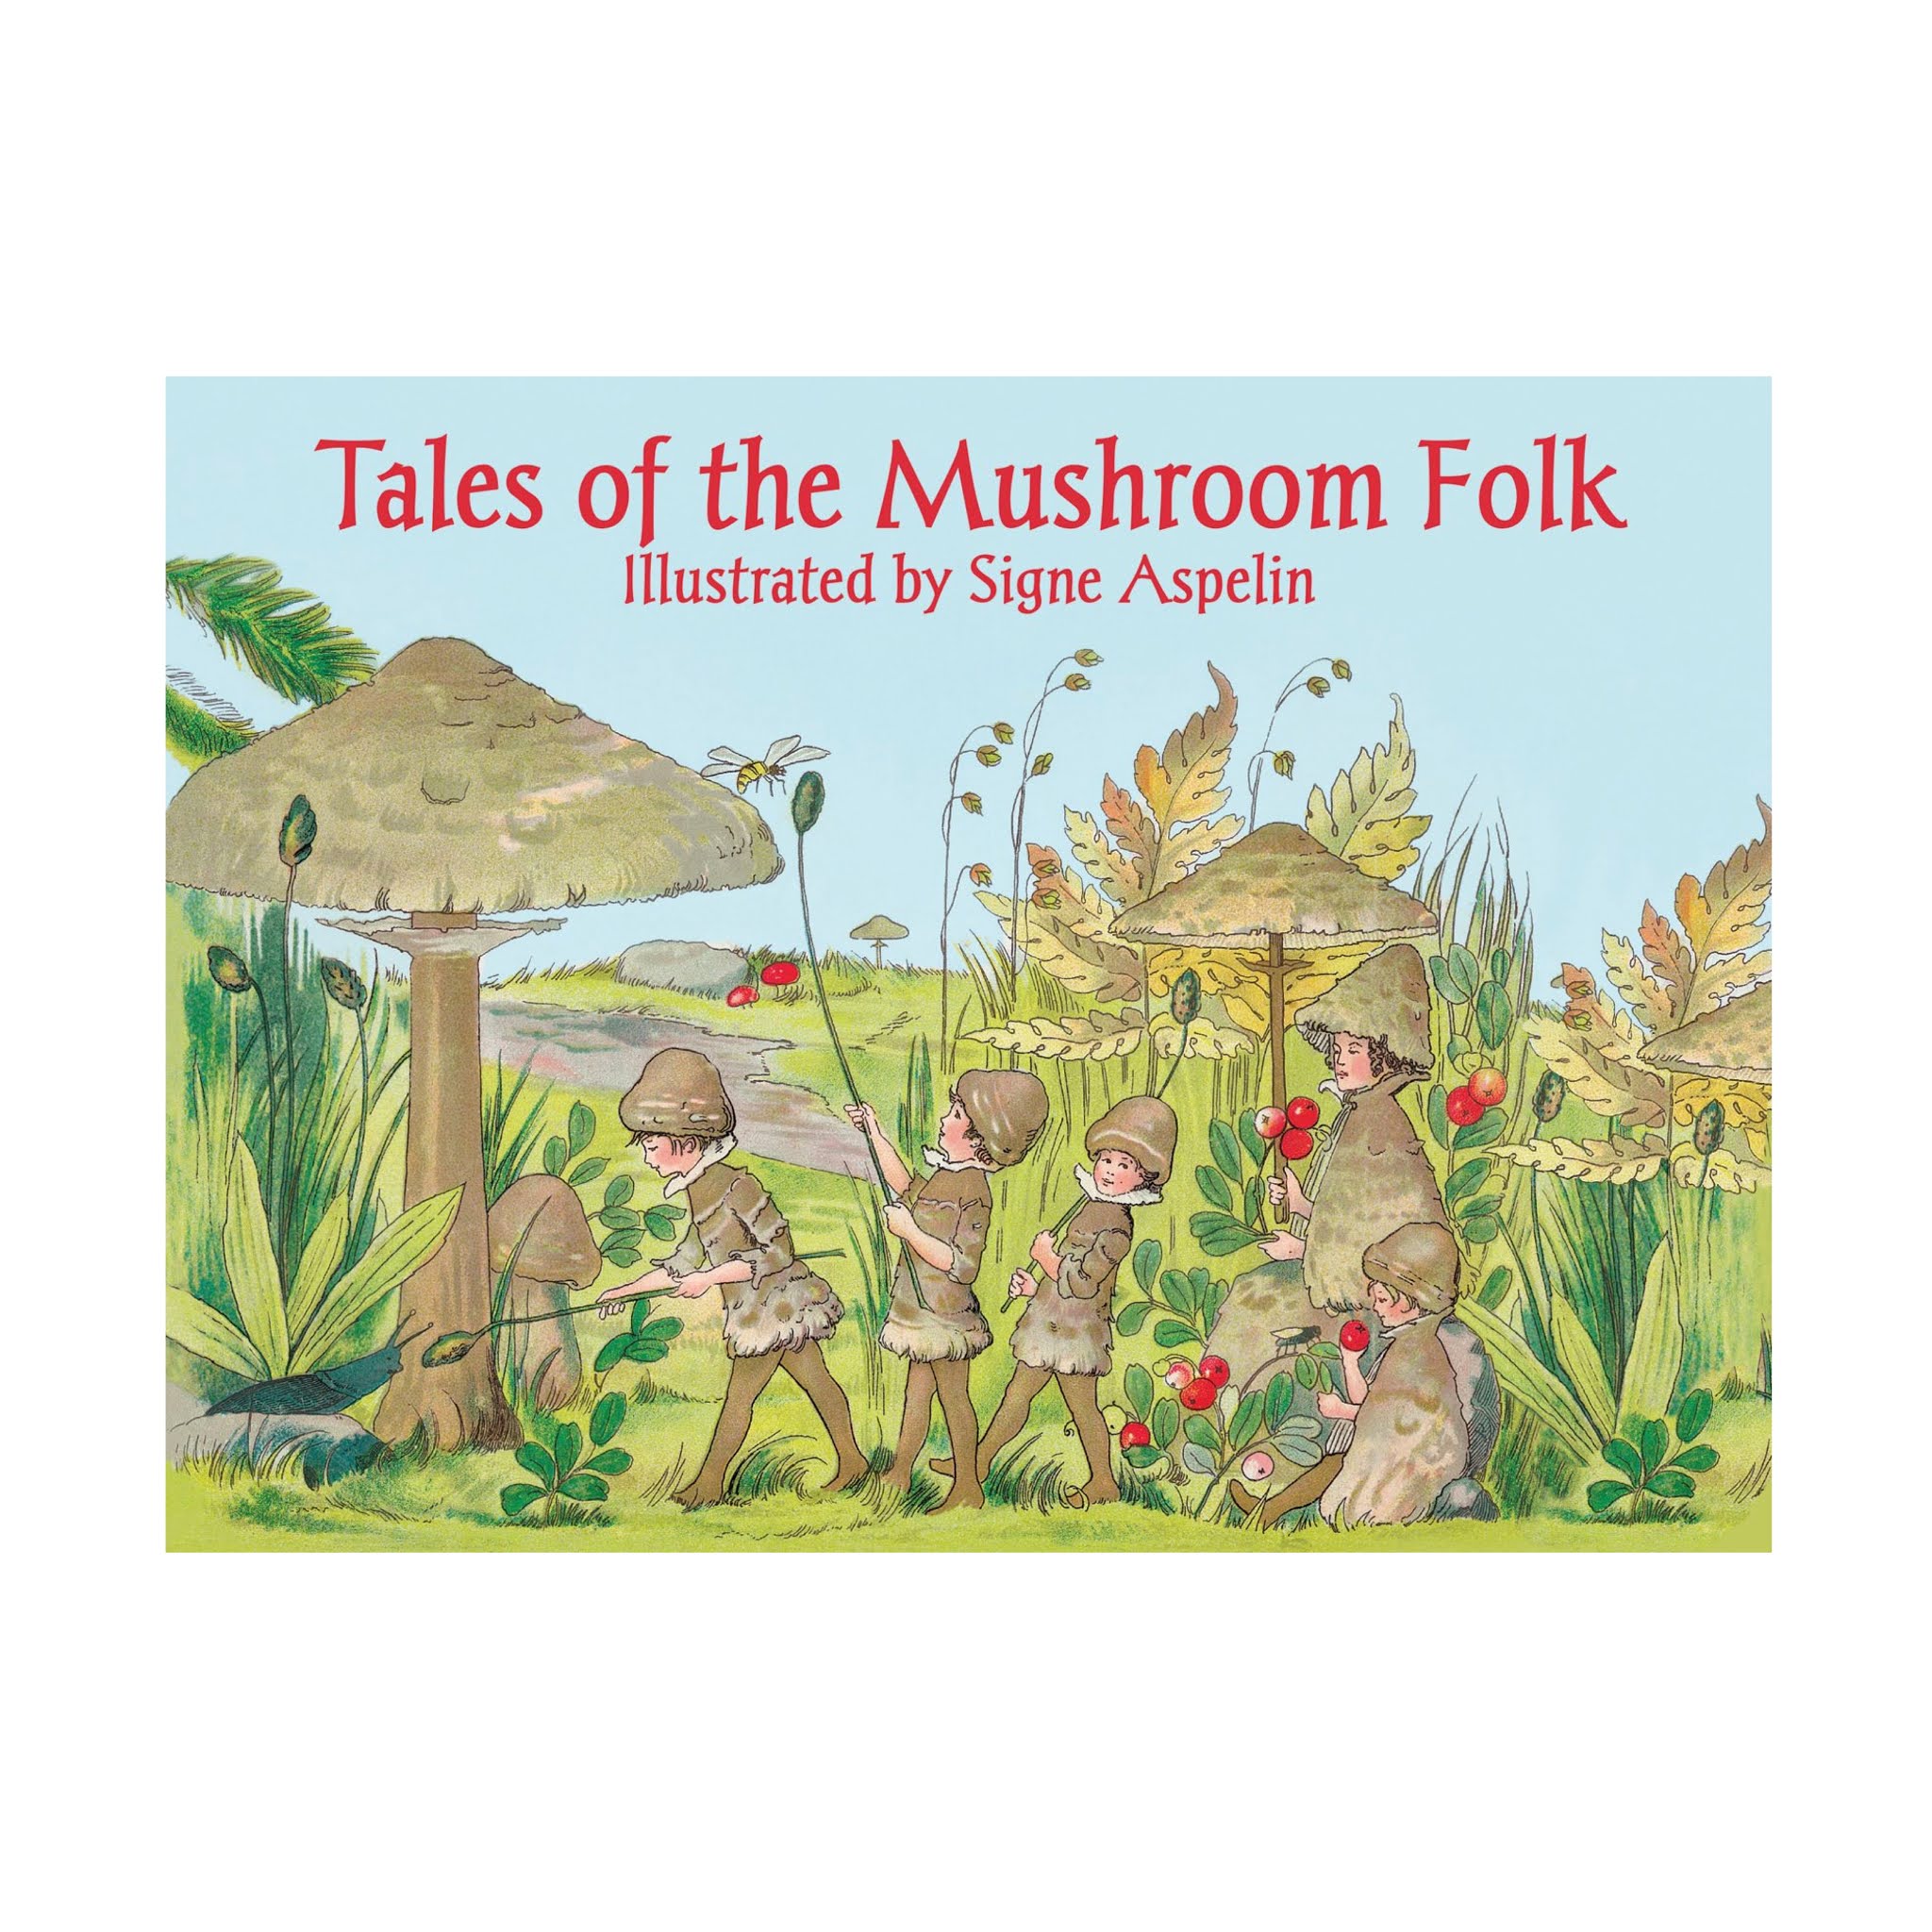 Tales of the Mushroom Folk book for kids